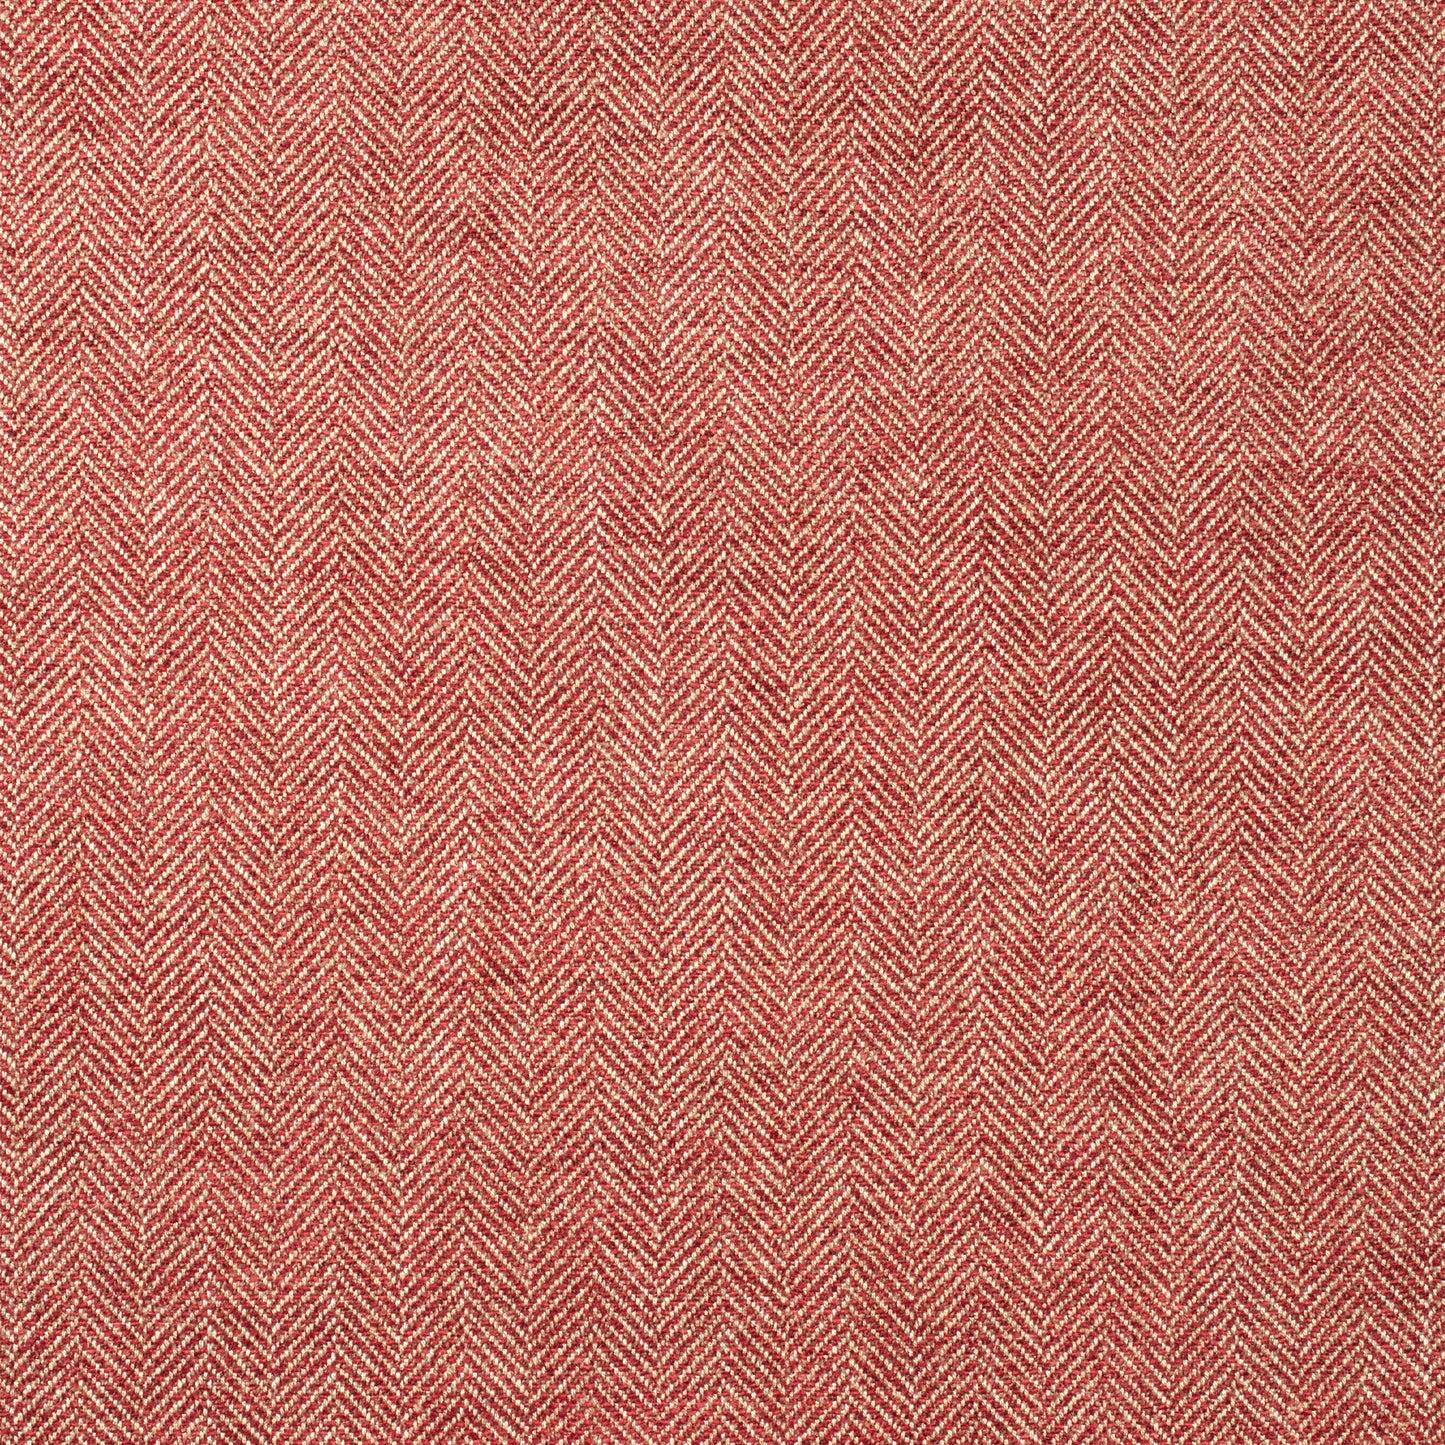 Purchase Thibaut Fabric Item W80714 pattern name Hadrian Herringbone color Cardinal